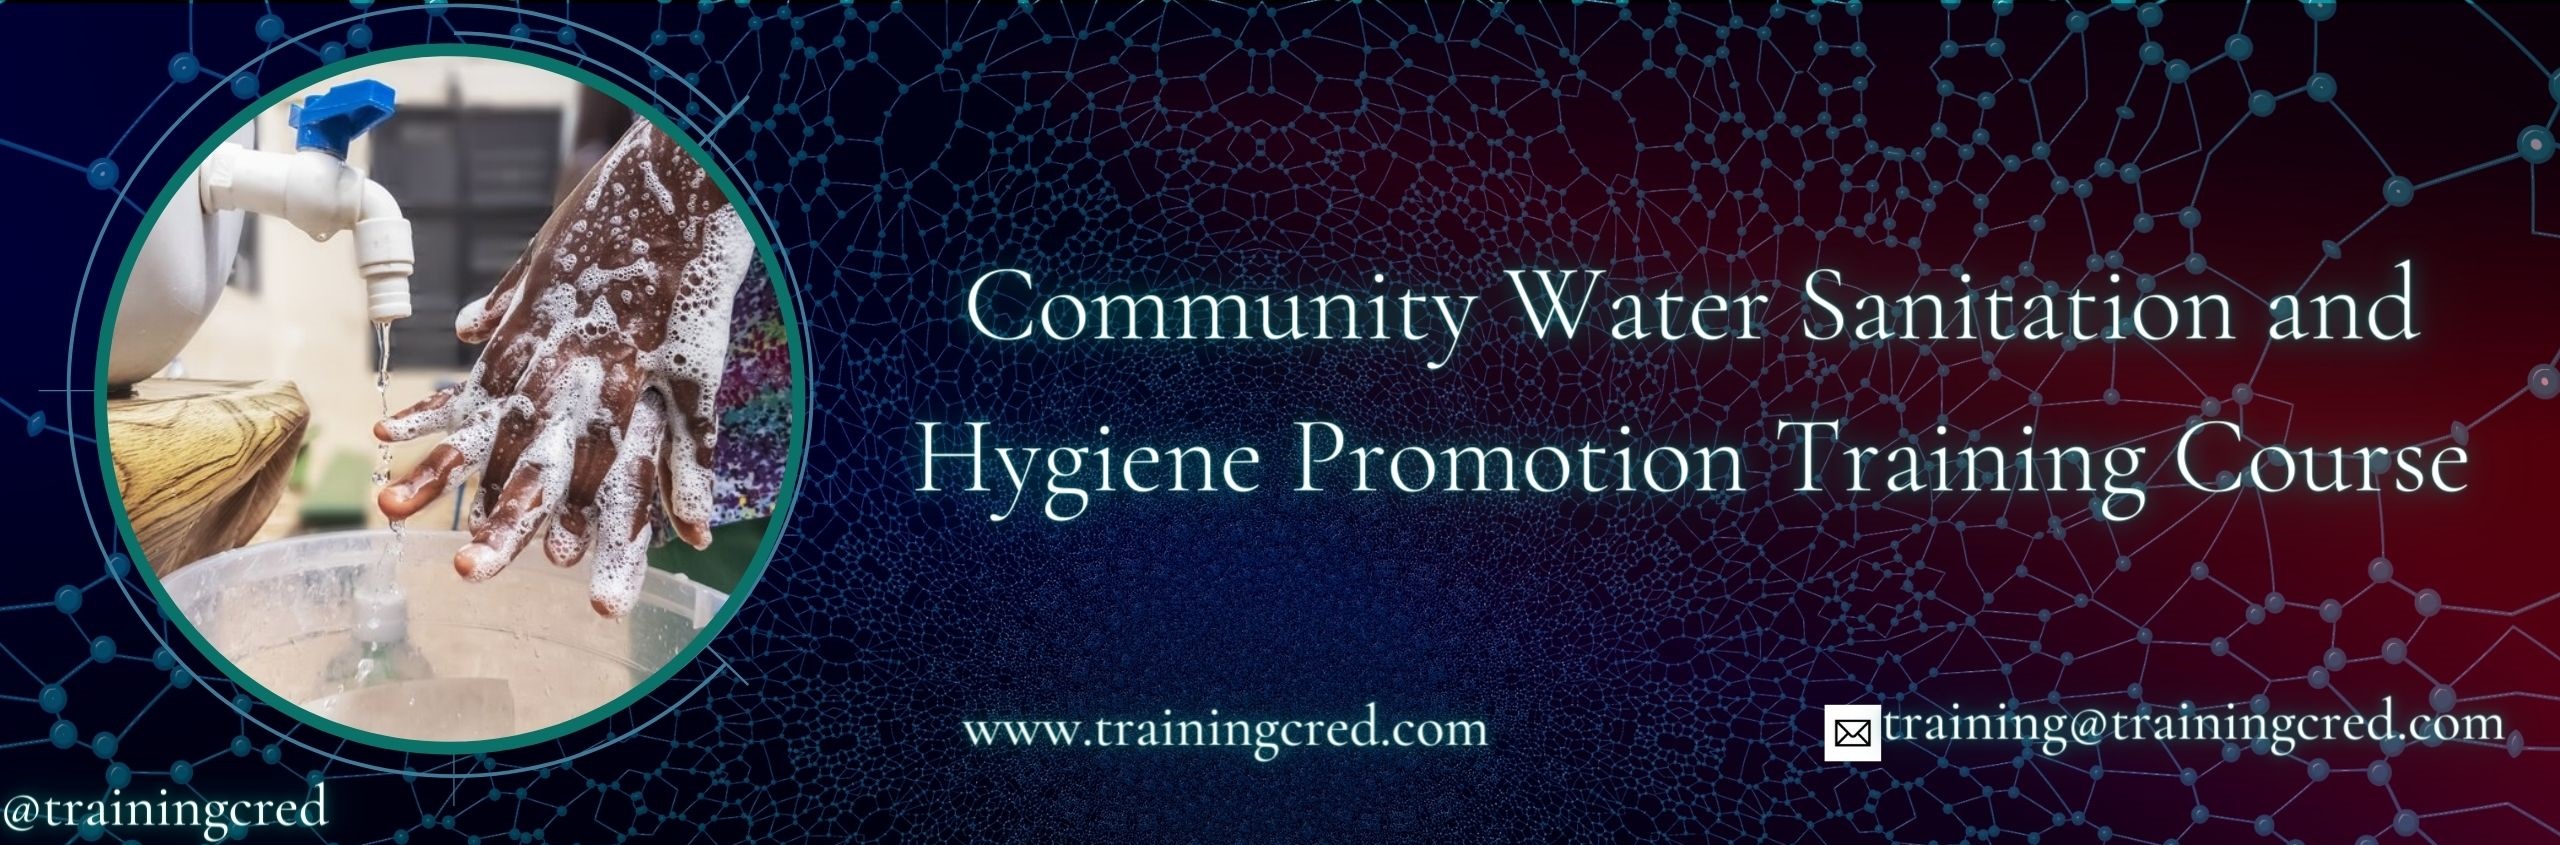 Community Water Sanitation and Hygiene Promotion Training